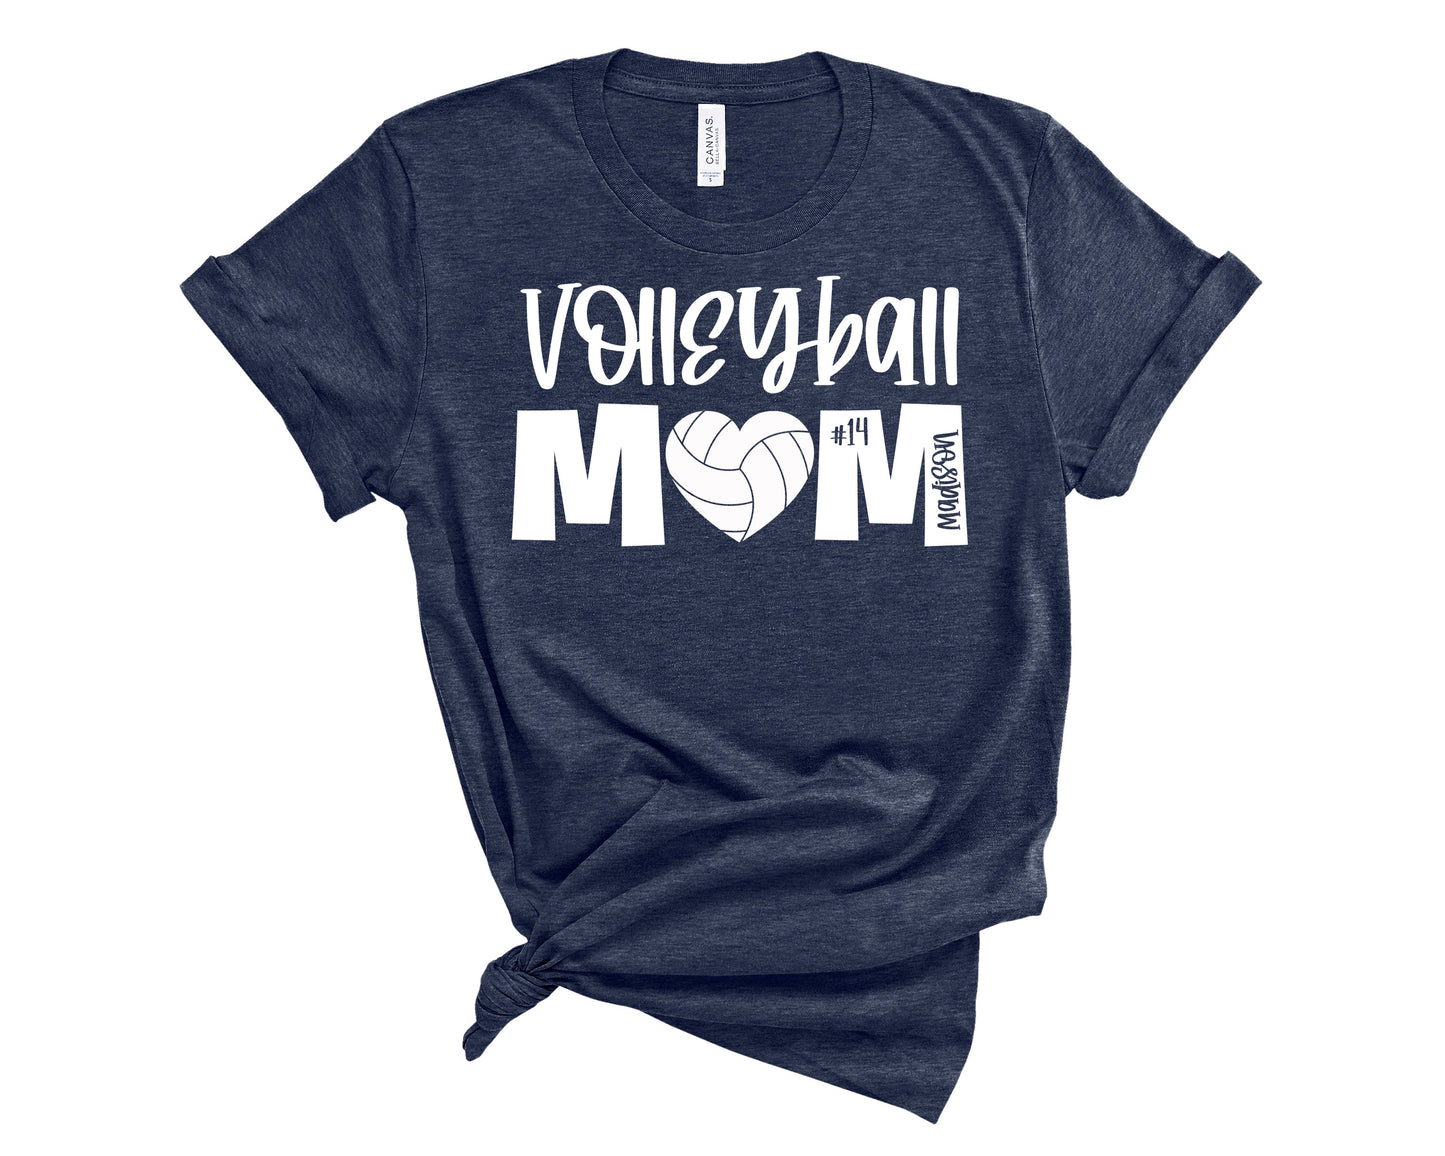 Volleyball mom shirt